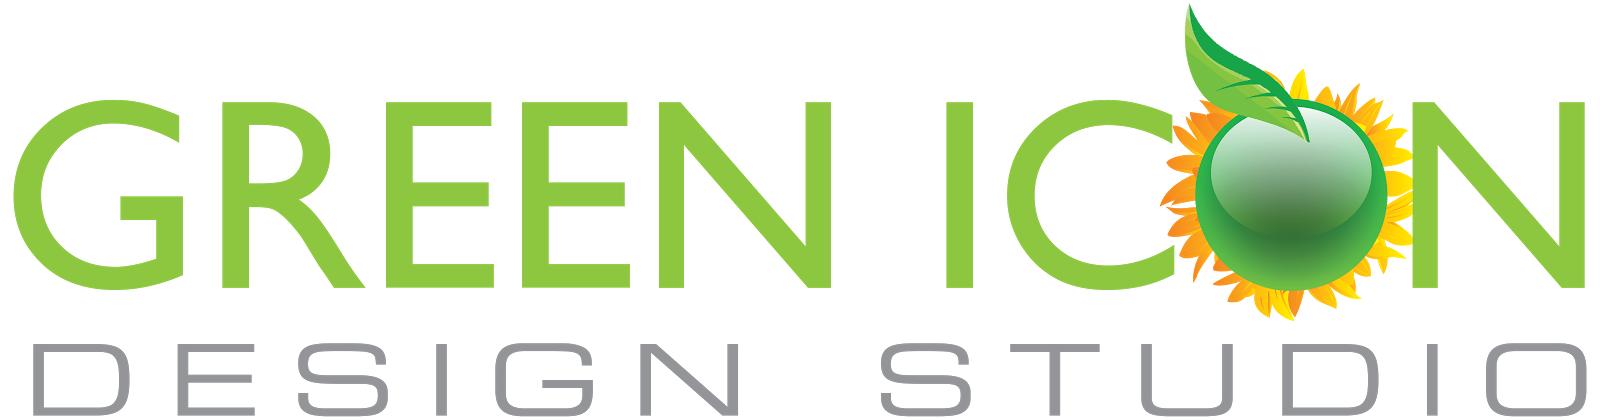 Green Icon Design Studio logo